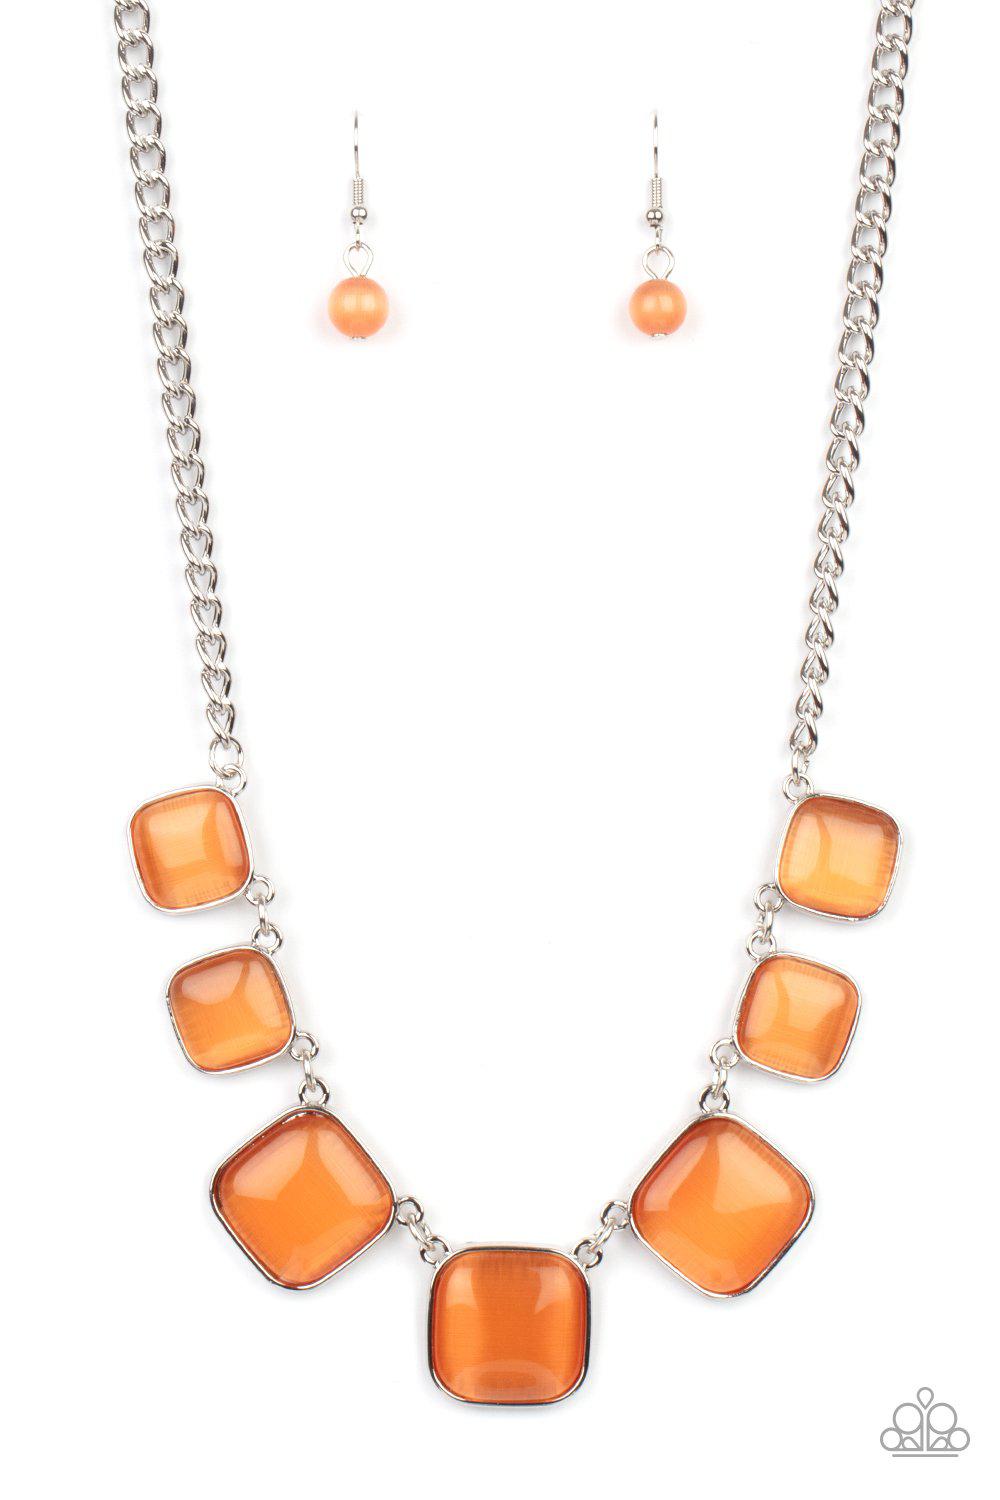 Aura Allure Orange Cat&#39;s Eye Stone Necklace - Paparazzi Accessories- lightbox - CarasShop.com - $5 Jewelry by Cara Jewels